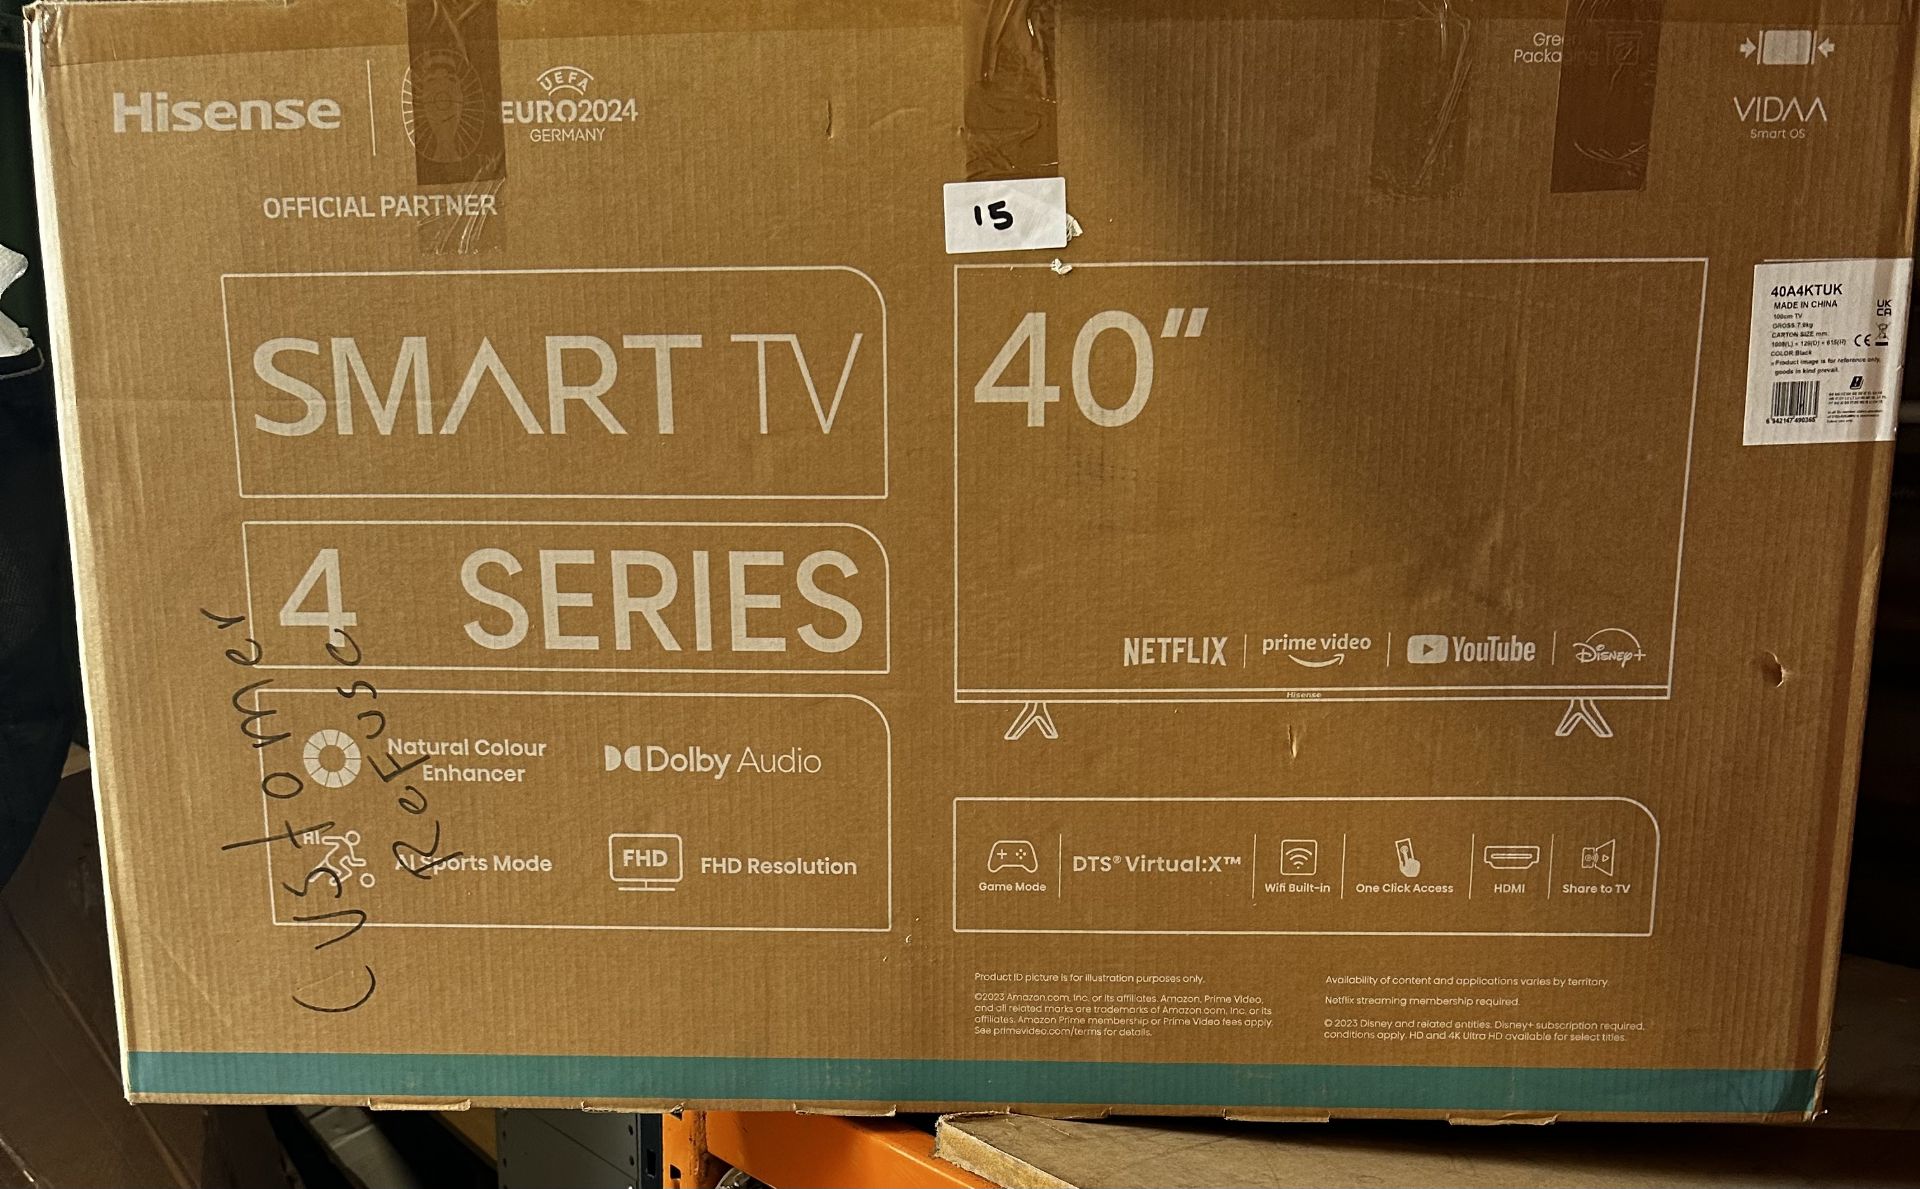 Hisense 4 Series 40"" Smart TV. RRP £200 - GRADE U